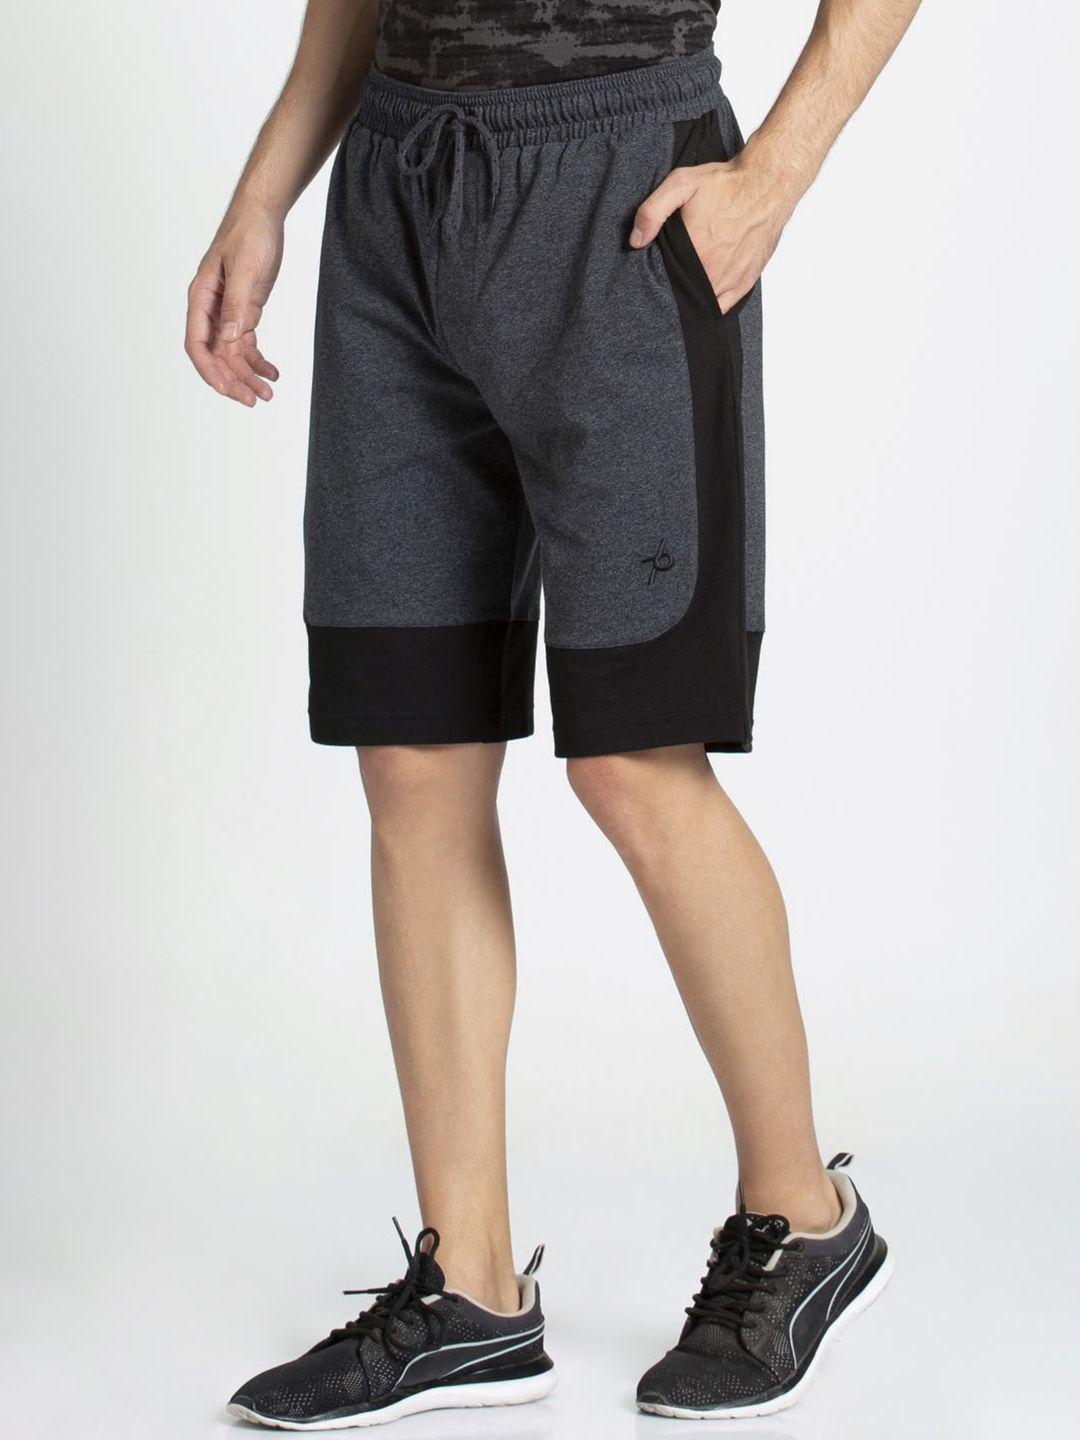 jockey men charcoal grey & black colourblocked slim fit sports shorts